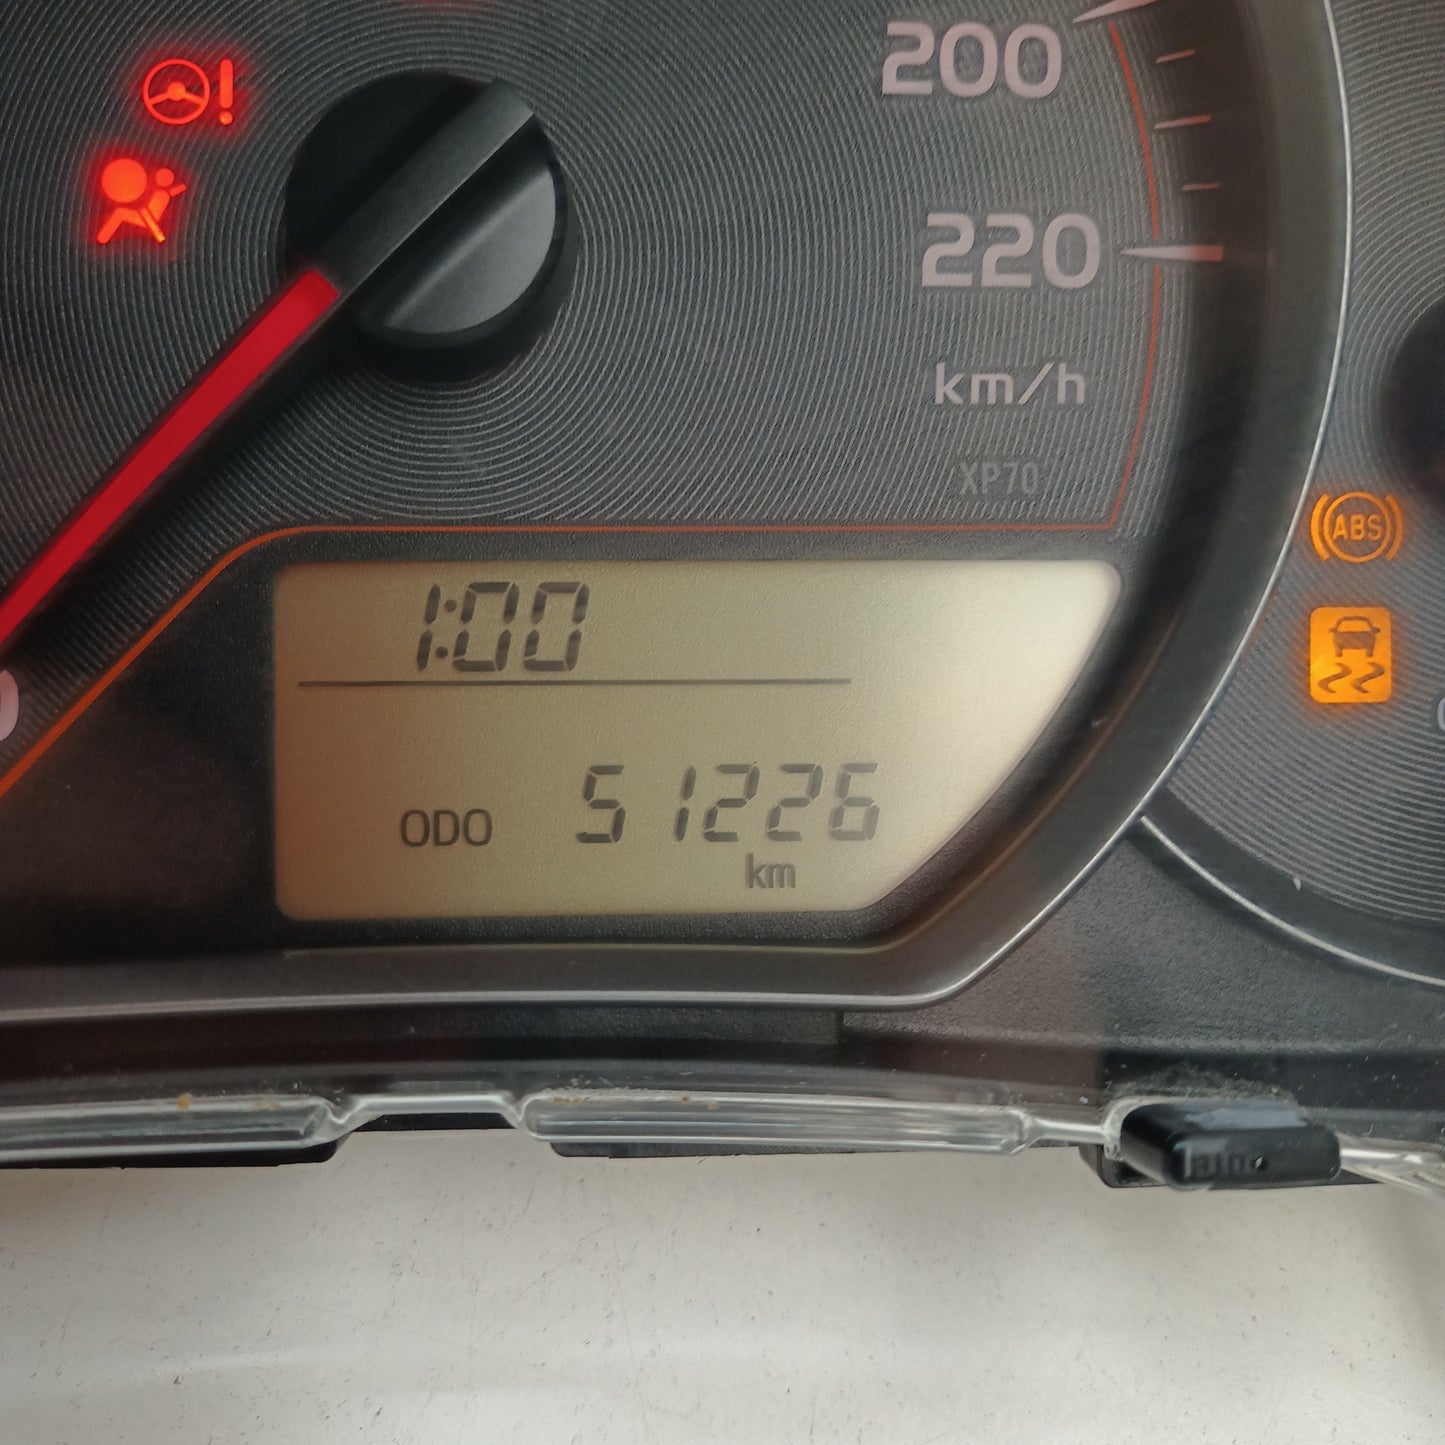 Toyota Yaris Hatchback Instrument Cluster NCP13# 2011 2012 2013 2014 51226 km